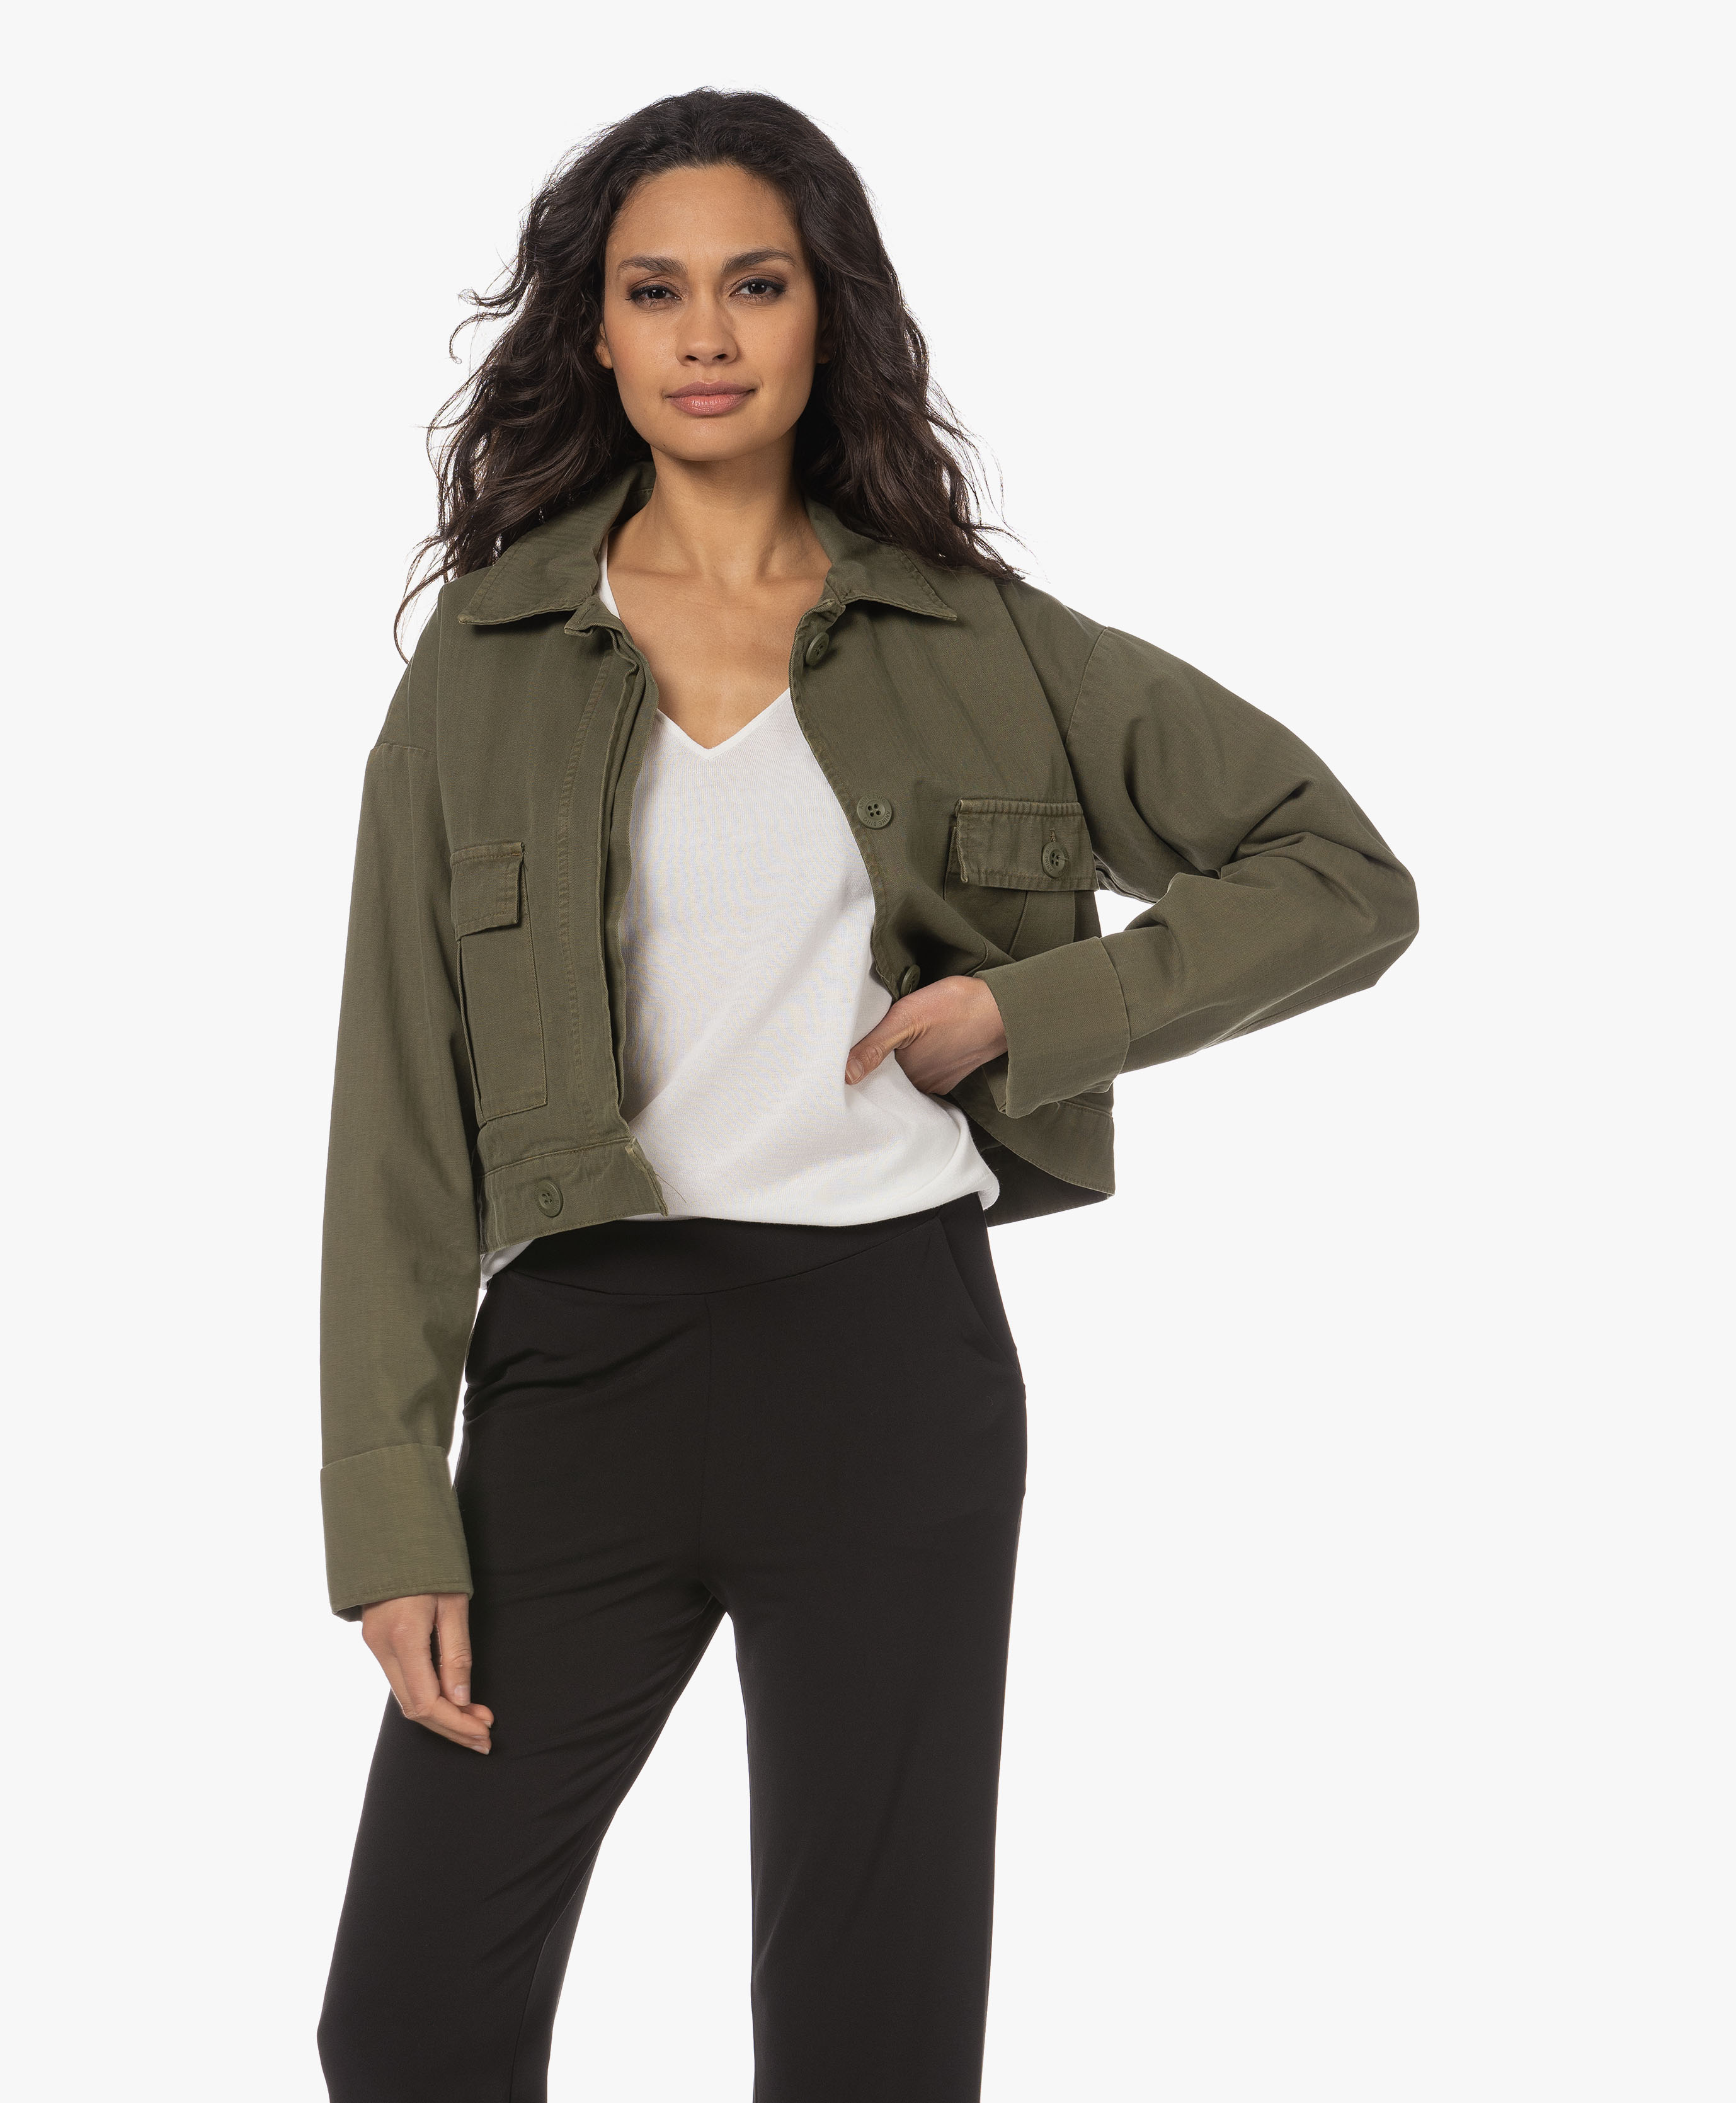 ANINE BING Adriana Cotton Tweed Jacket - Army Green